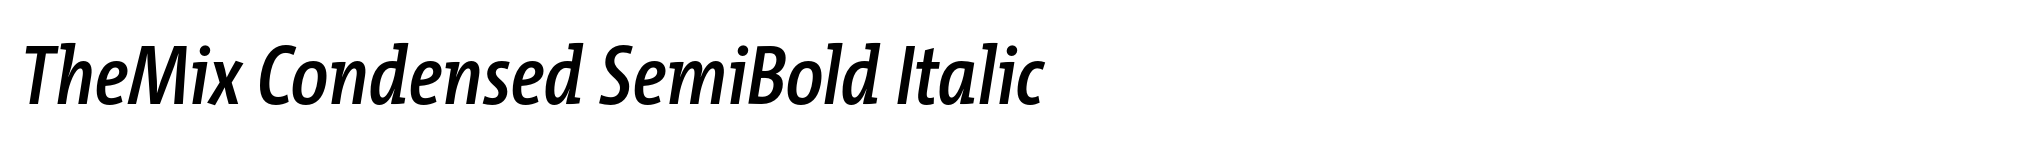 TheMix Condensed SemiBold Italic image